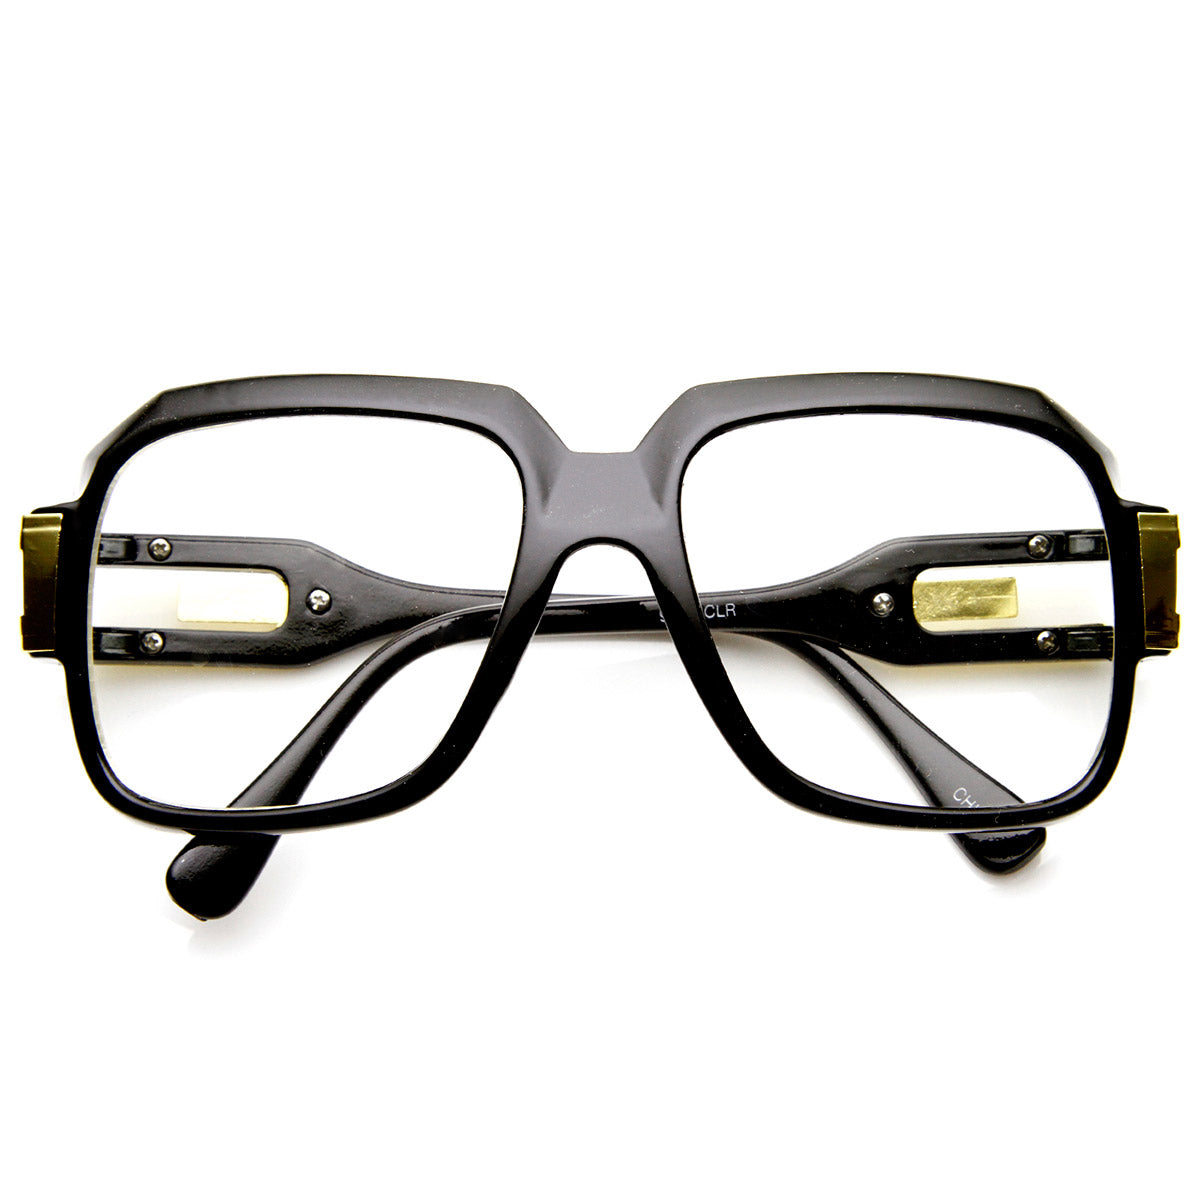 Oversized Square Sunglasses Retro Mens Women Fashion Hip Hop Shade Glasses  UV400